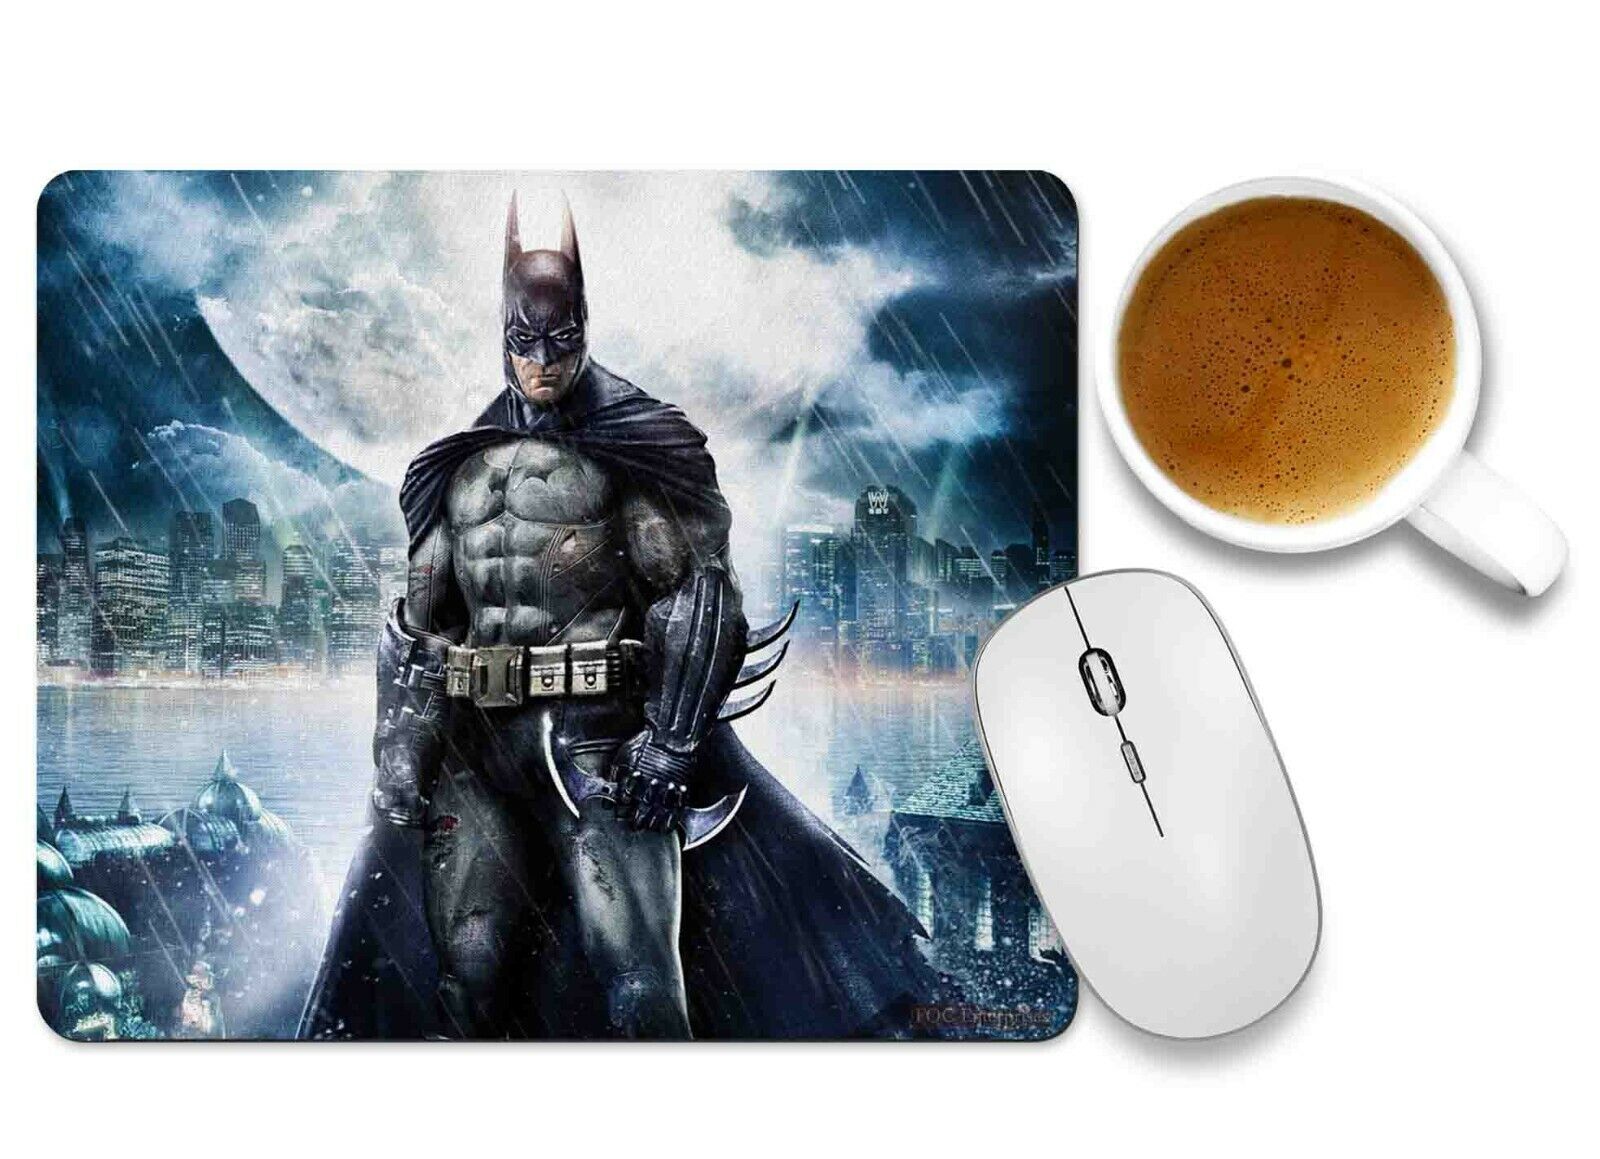 Superhero Batman Mouse pad Non-Slip Rubber Base Rectangle Gaming Mousepad